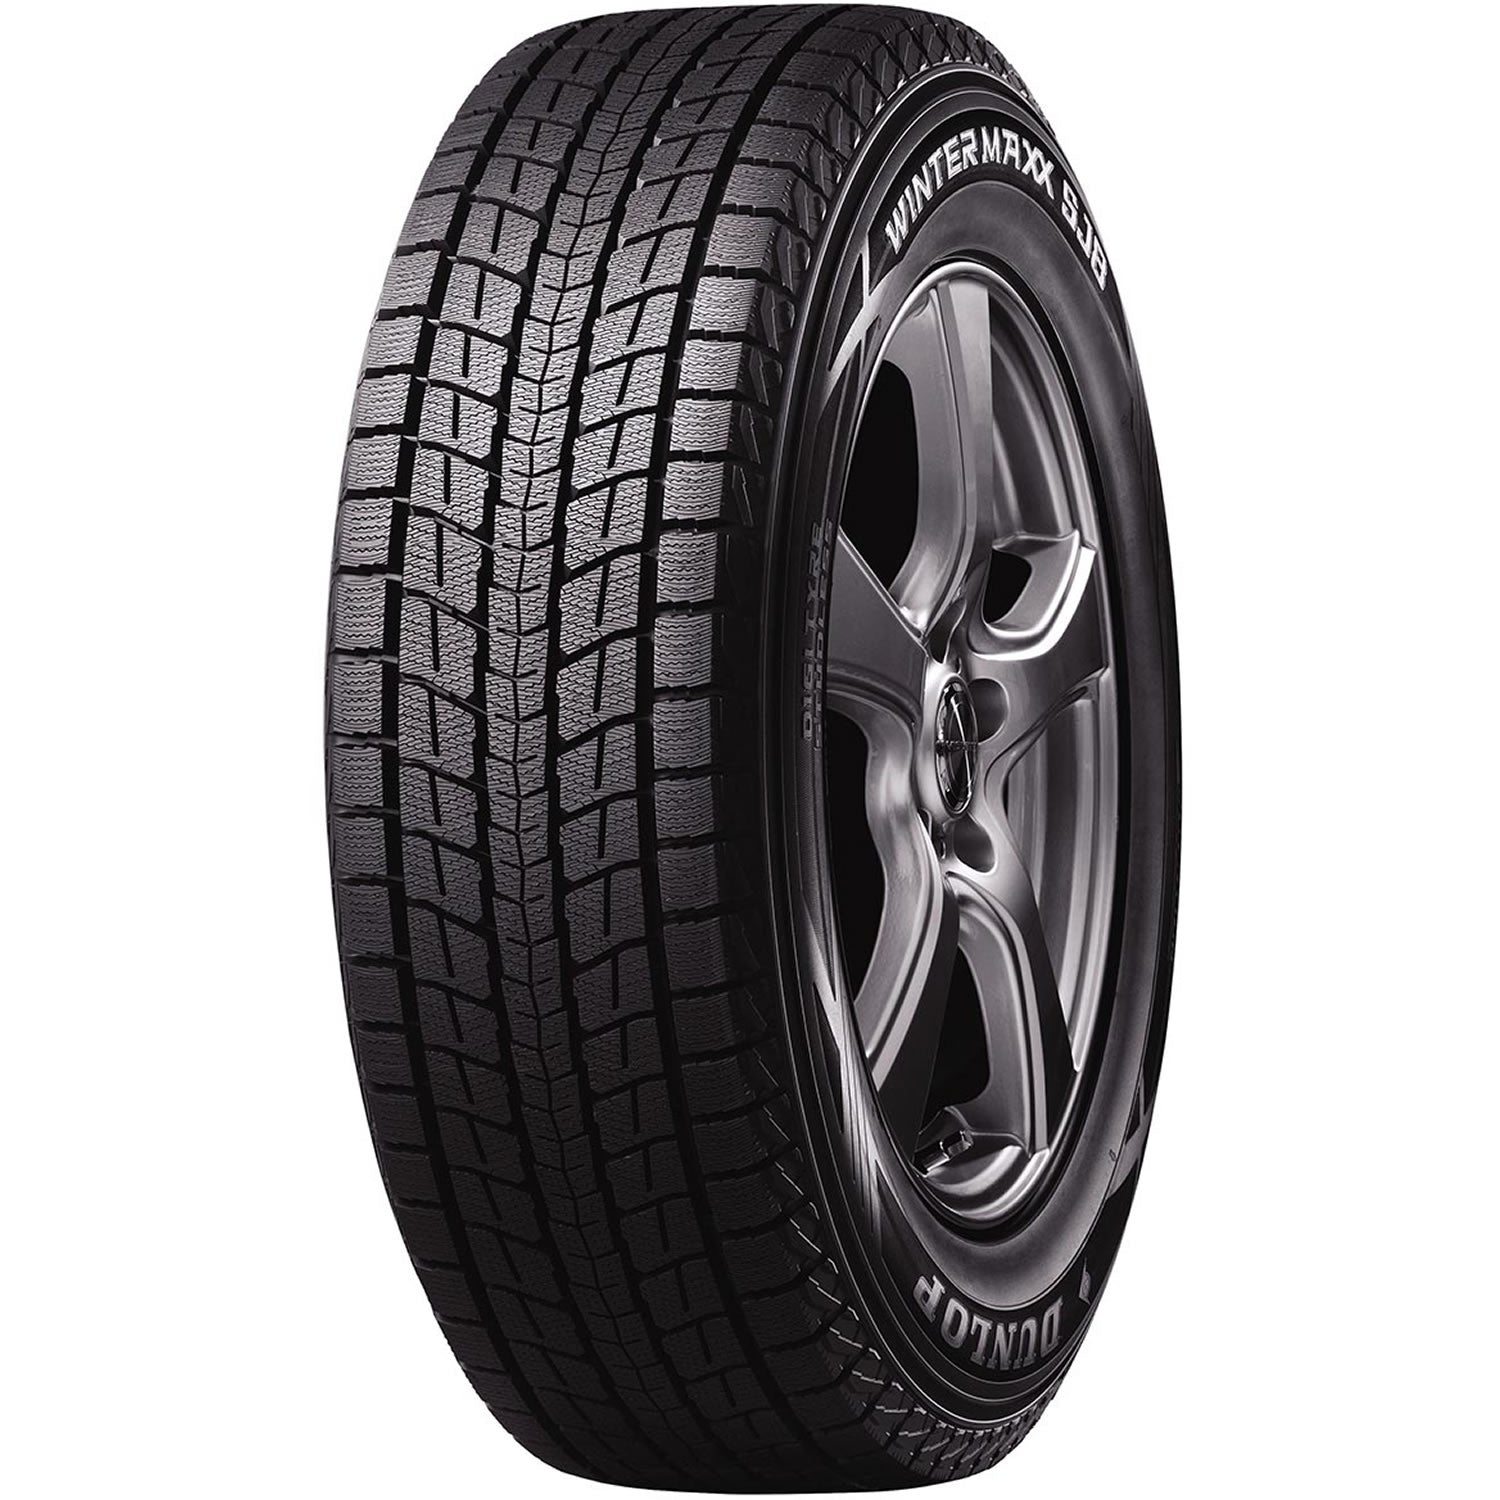 DUNLOP WINTER MAXX SJ8 235/50R18 (27.3X9.3R 18) Tires